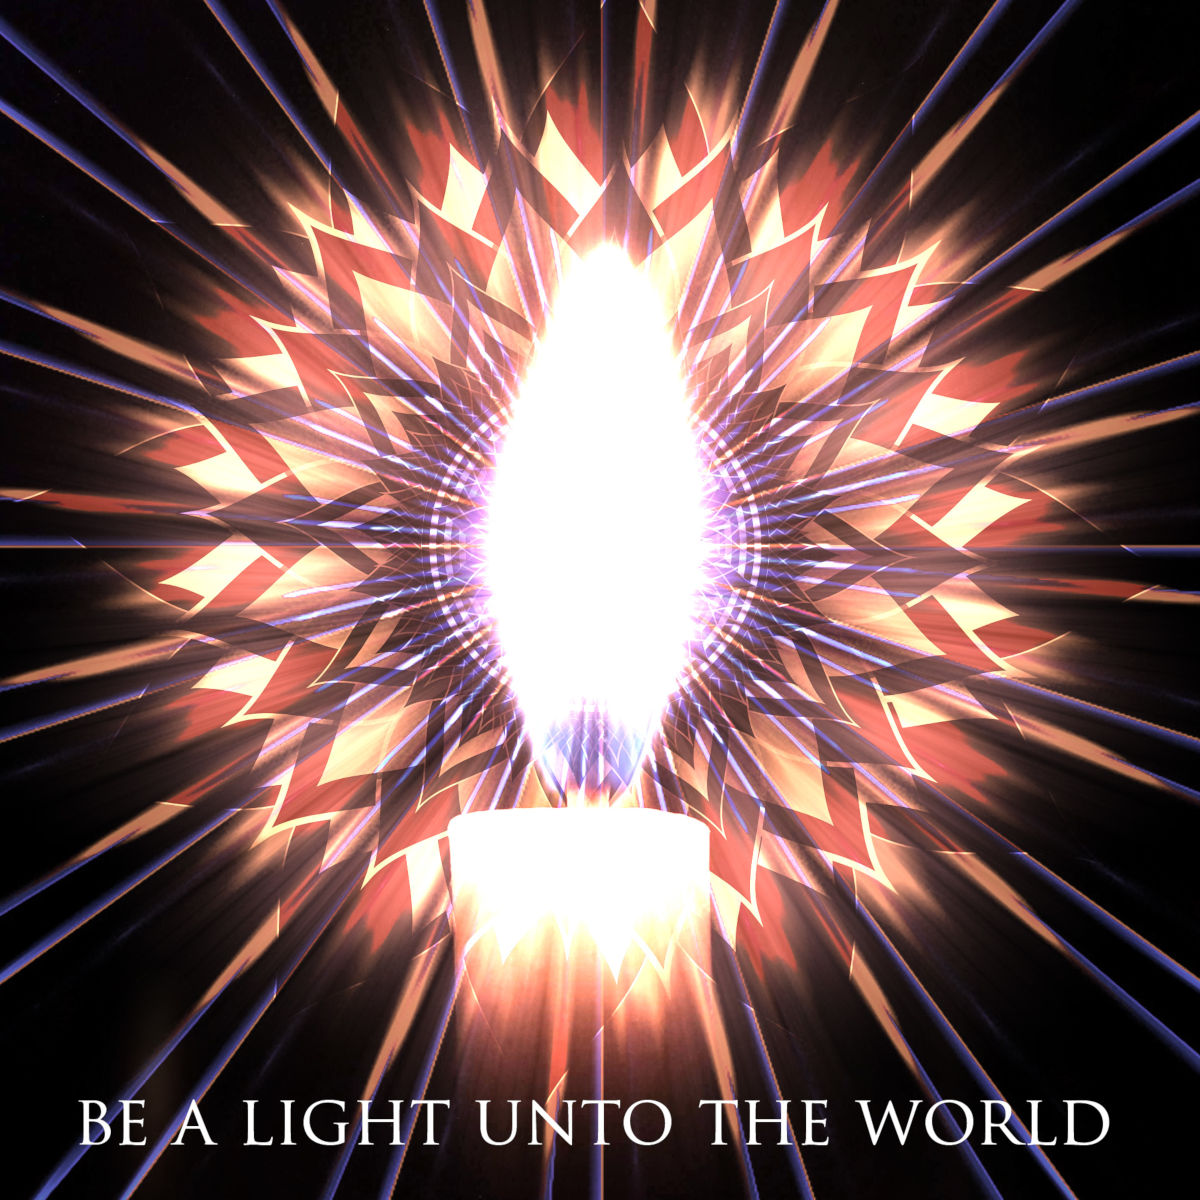 Be a light unto the world